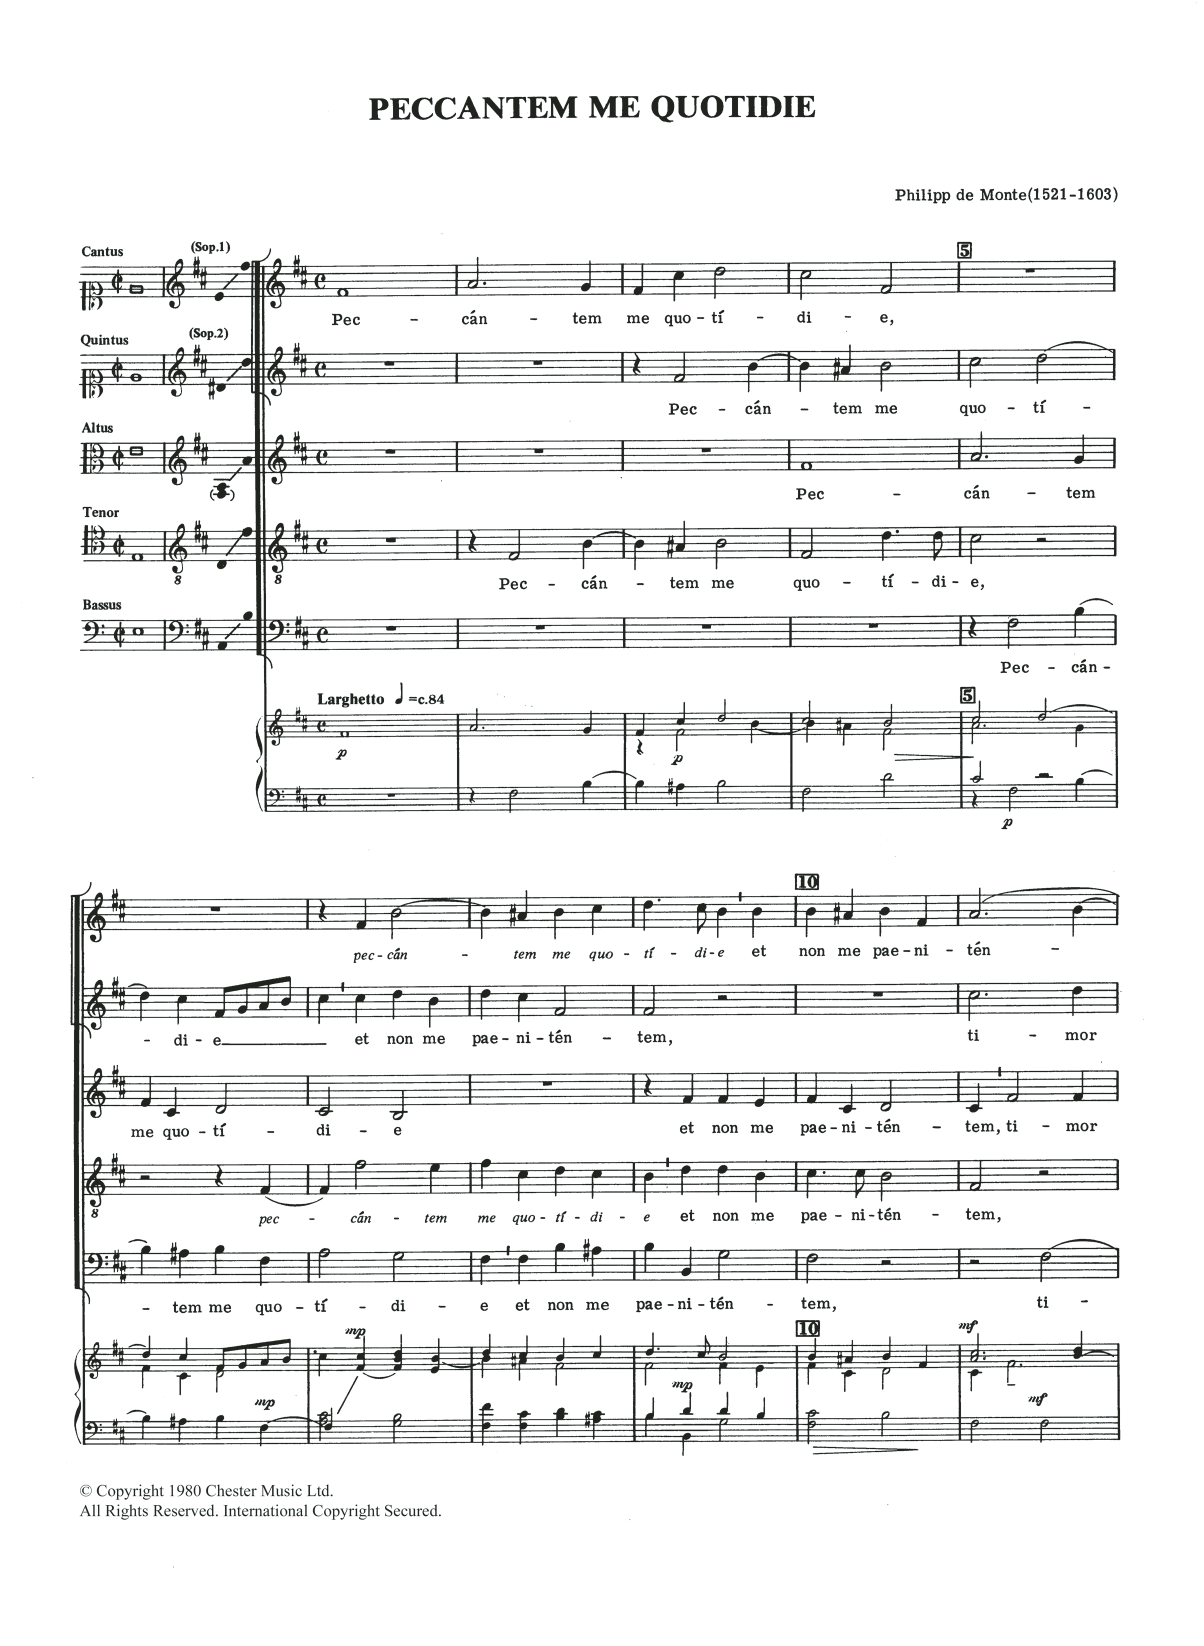 Philippe de Monte Peccantem Me Quotidie sheet music notes and chords arranged for SATB Choir